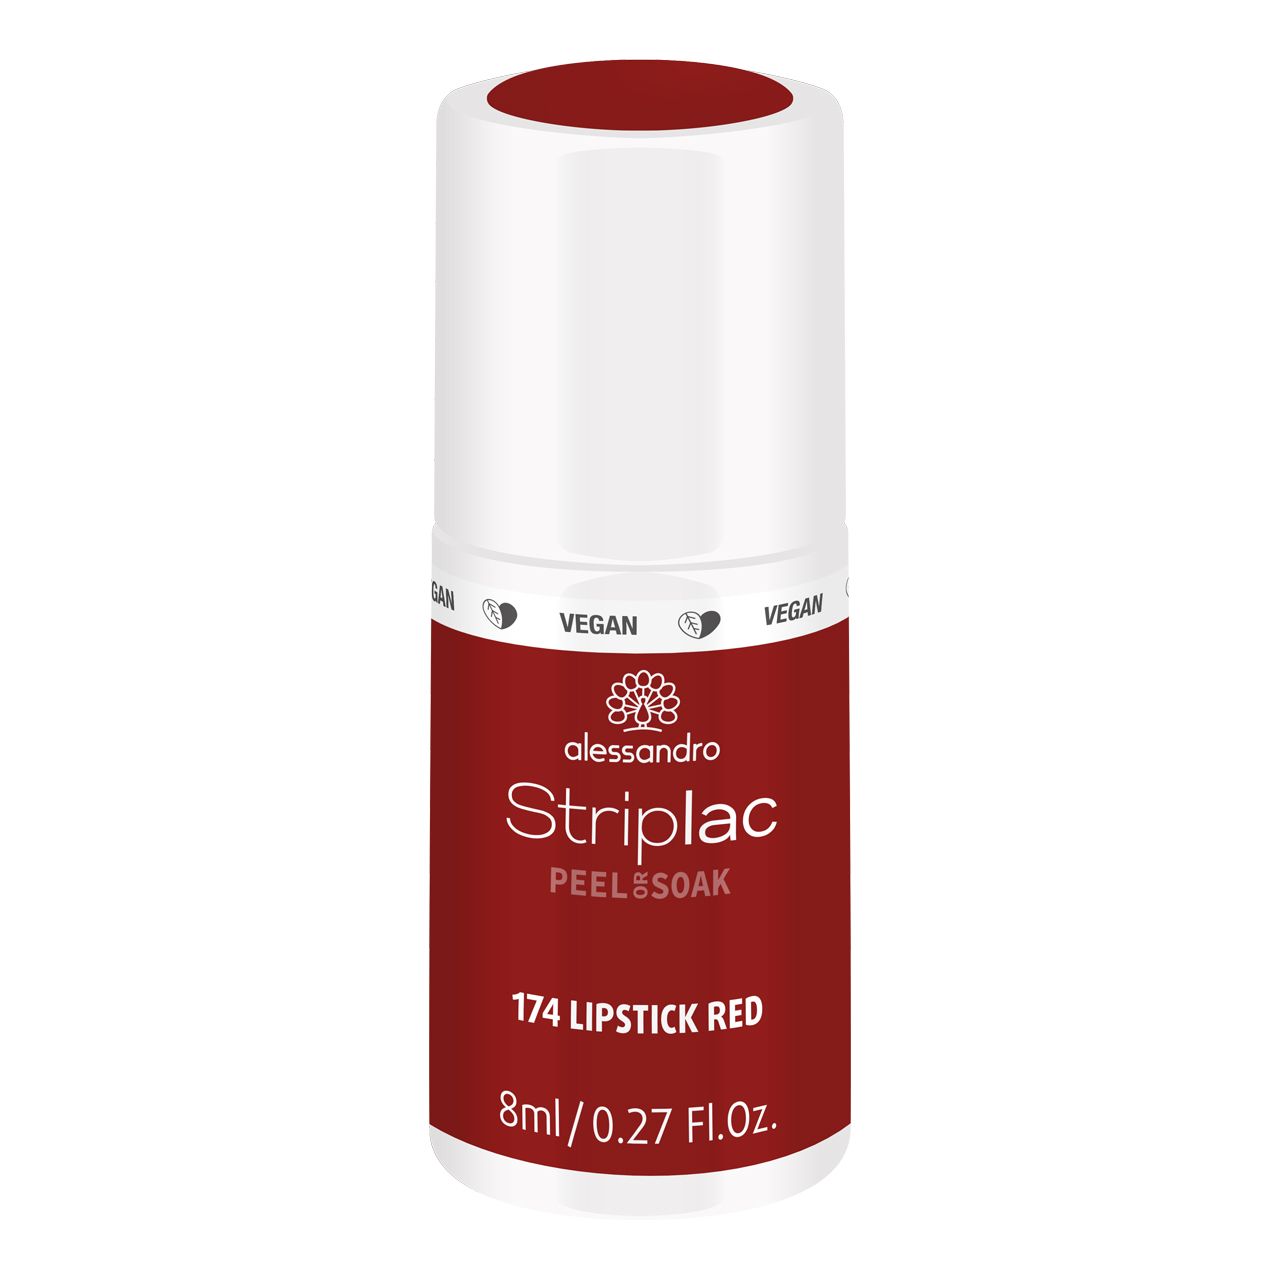 Striplac Lipstick Red 174